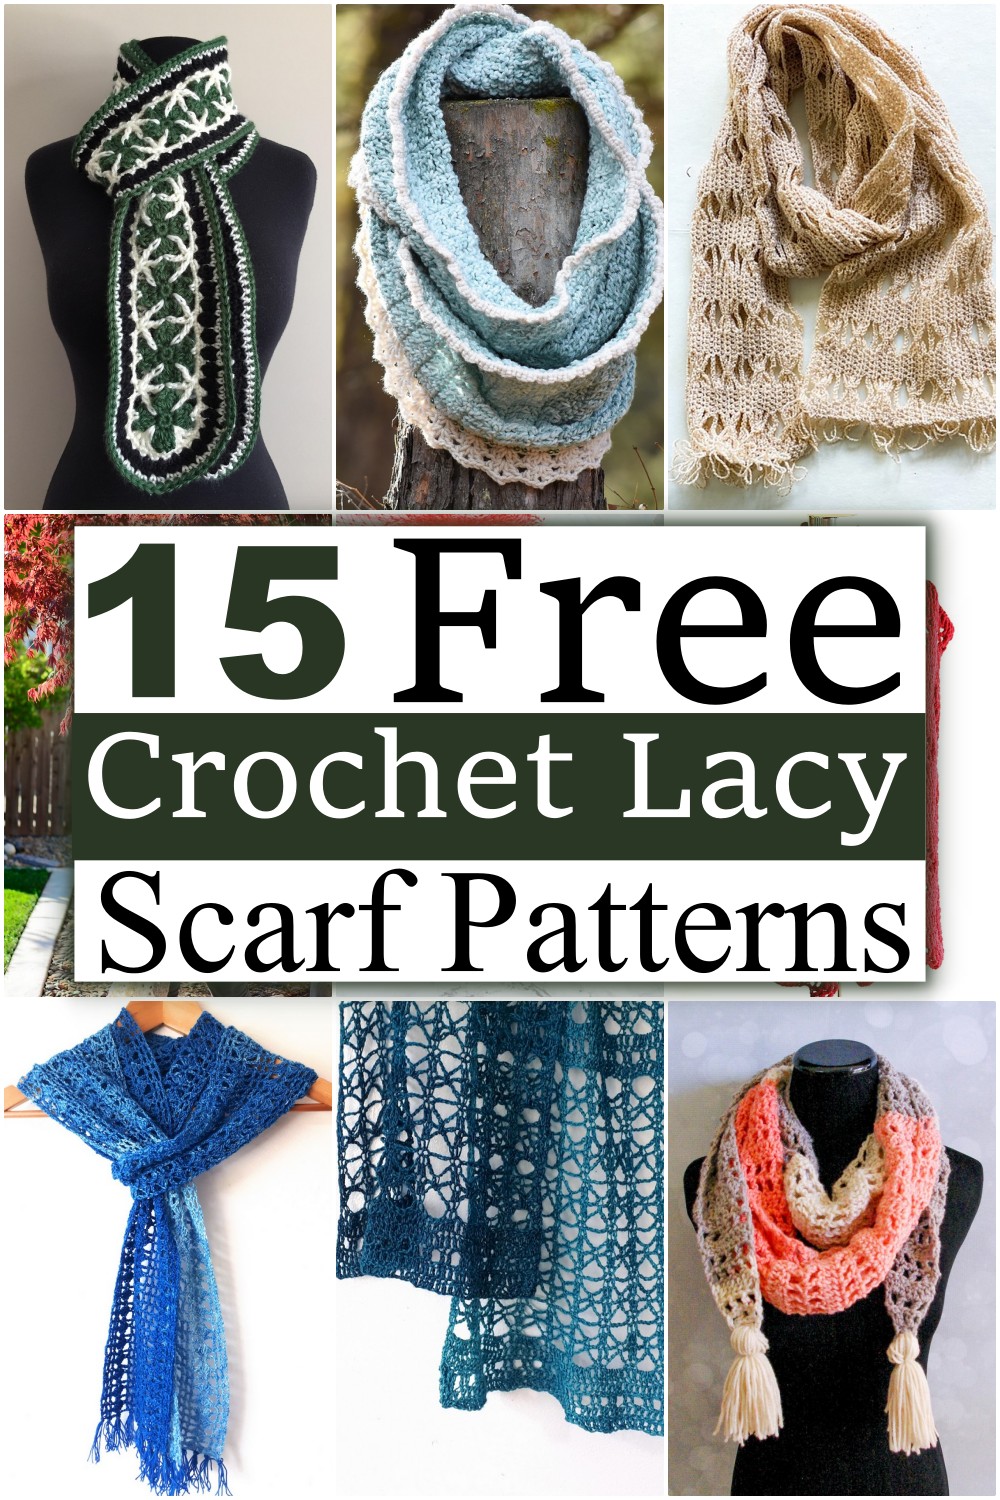 Crochet Lacy Scarf Patterns 